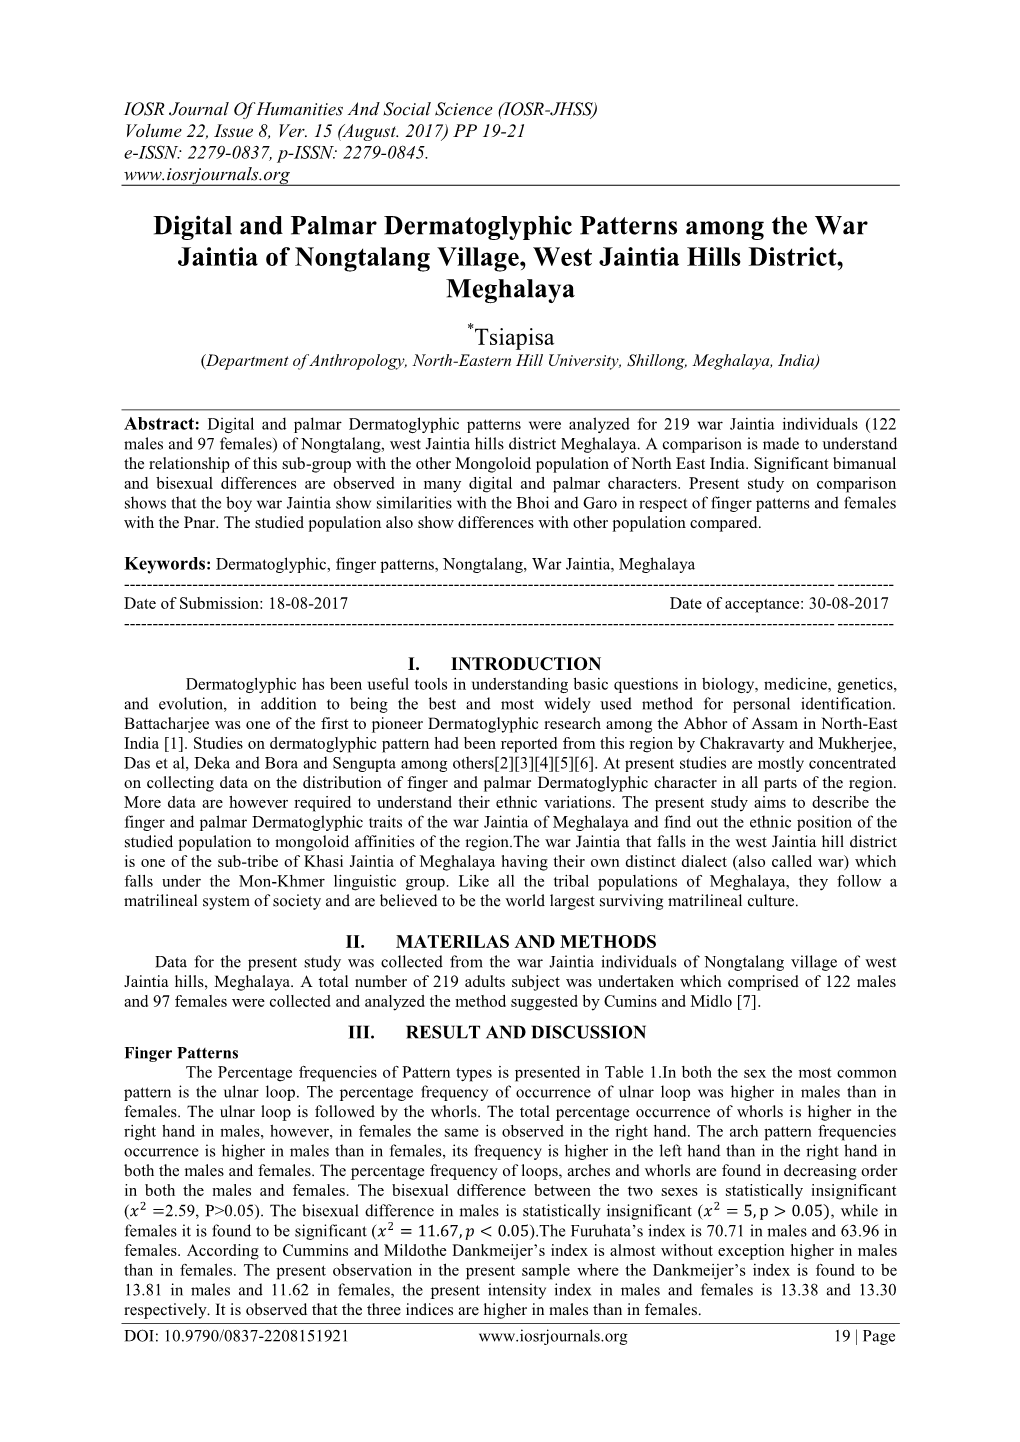 Digital and Palmar Dermatoglyphic Patterns Among the War Jaintia of Nongtalang Village, West Jaintia Hills District, Meghalaya